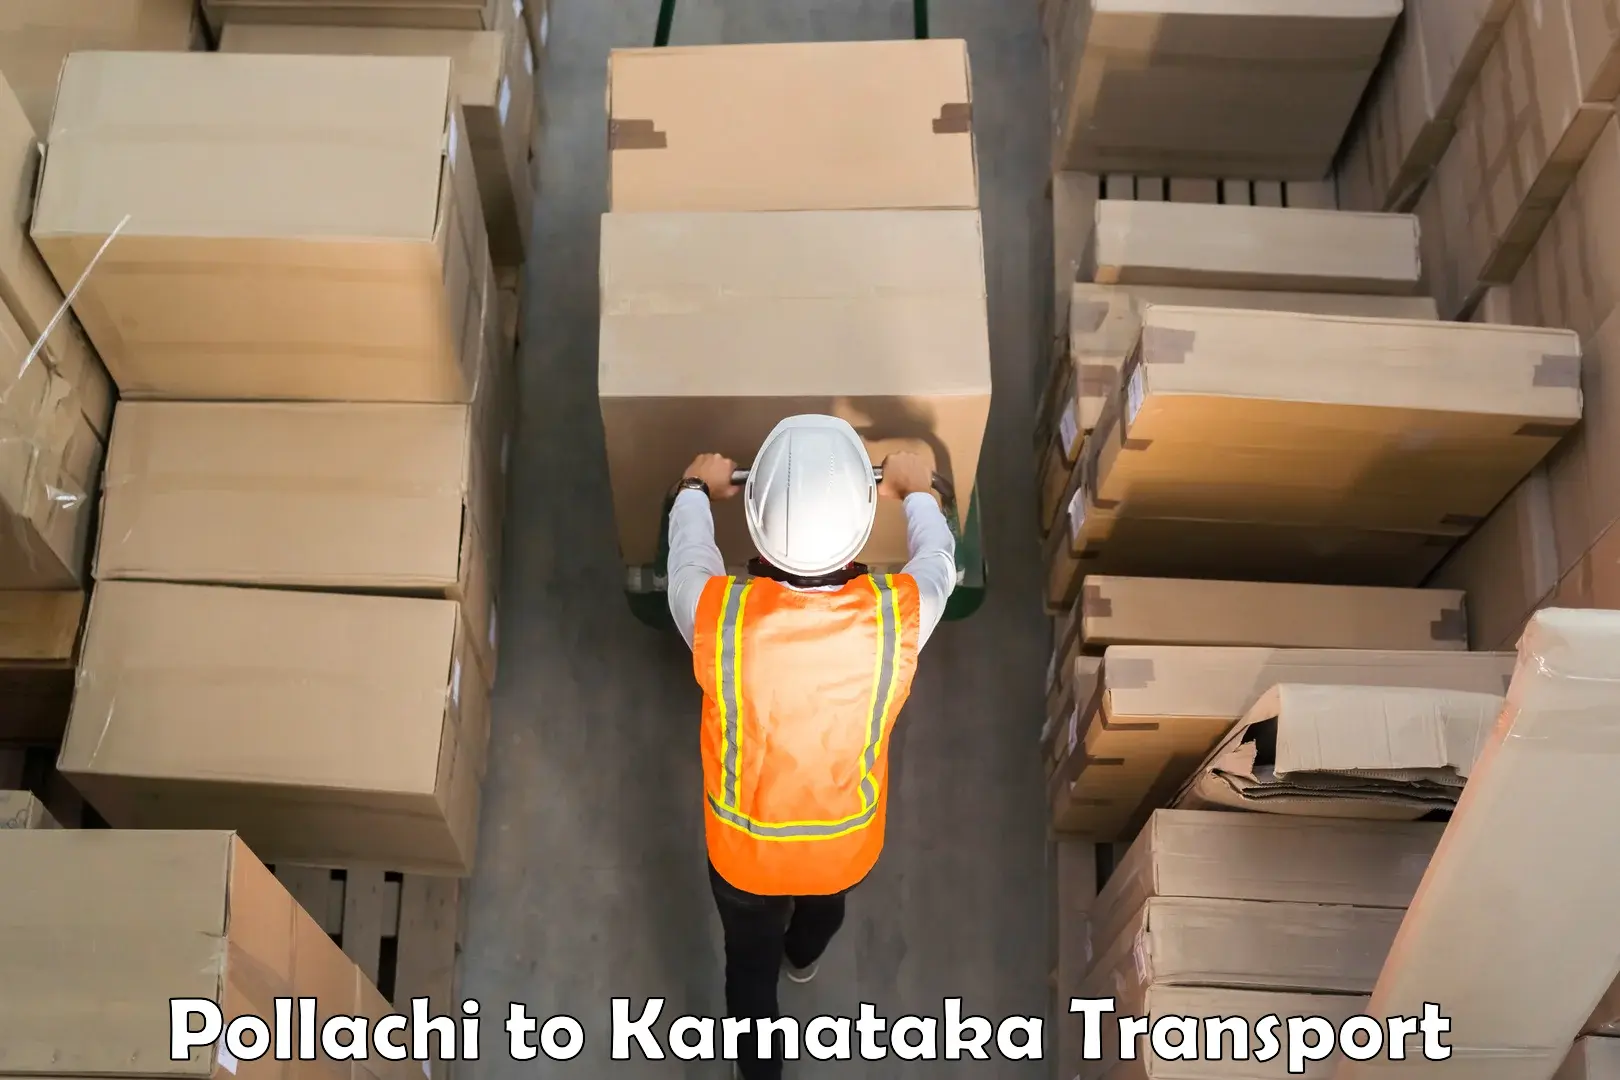 Commercial transport service Pollachi to Kolar